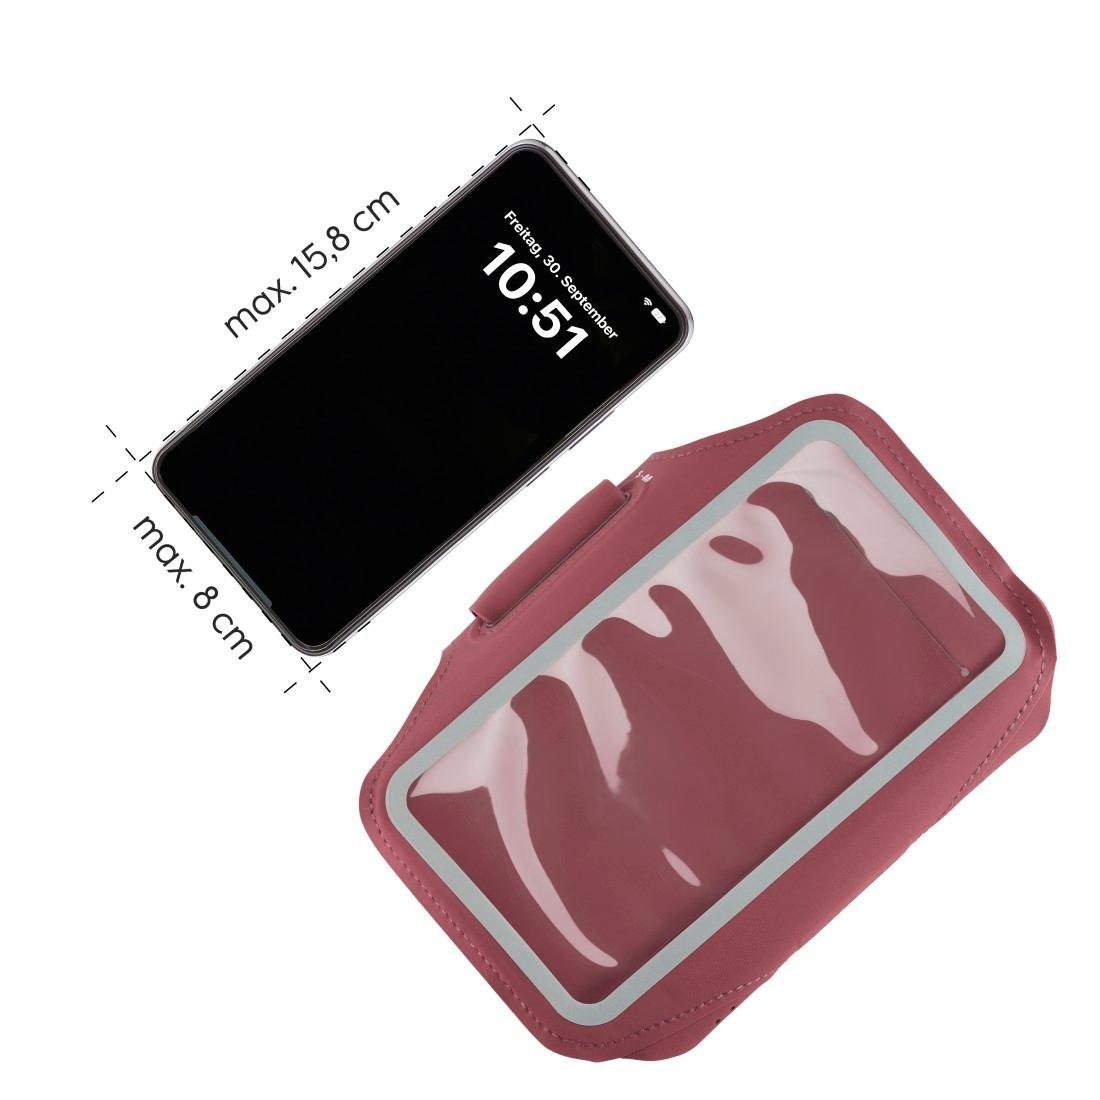 (5,5 cm Sportarmband XXL für Smartphone-Hülle Smartphones, Größe 14,0 Zoll) Sports" "Finest Hama rosé